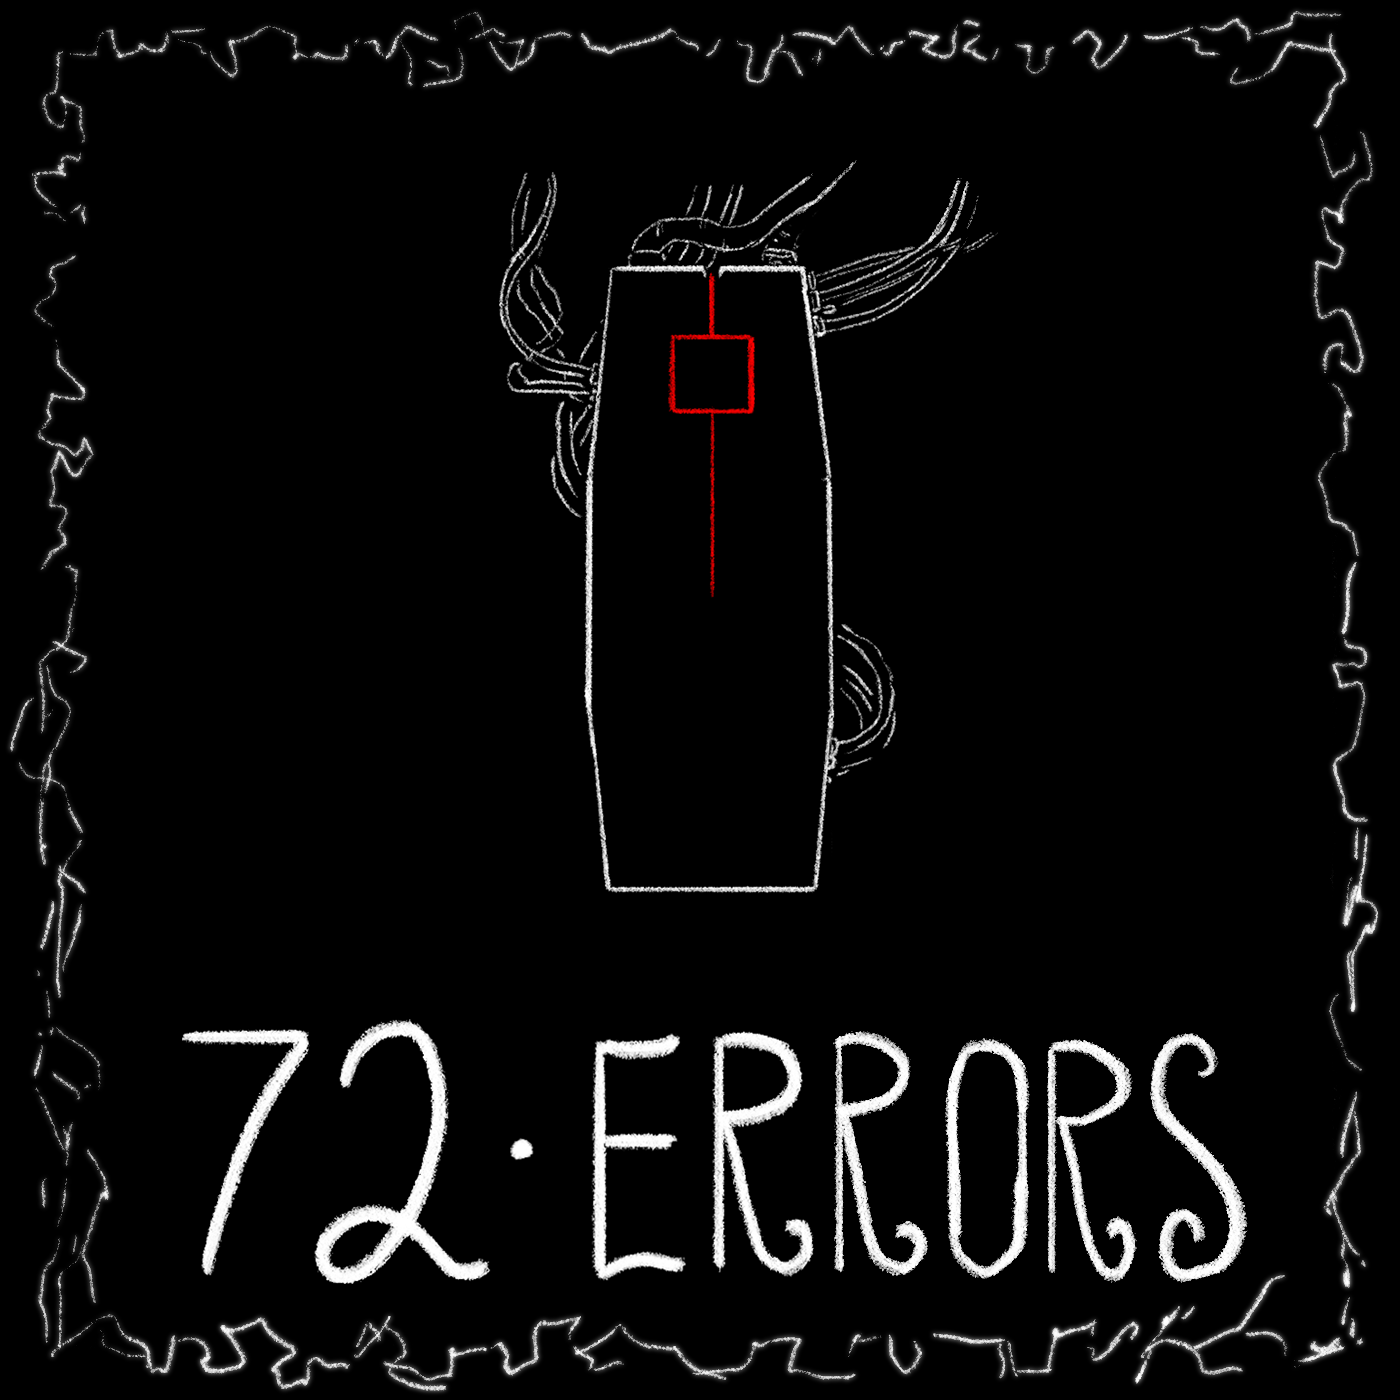 Episode 72 - Errors